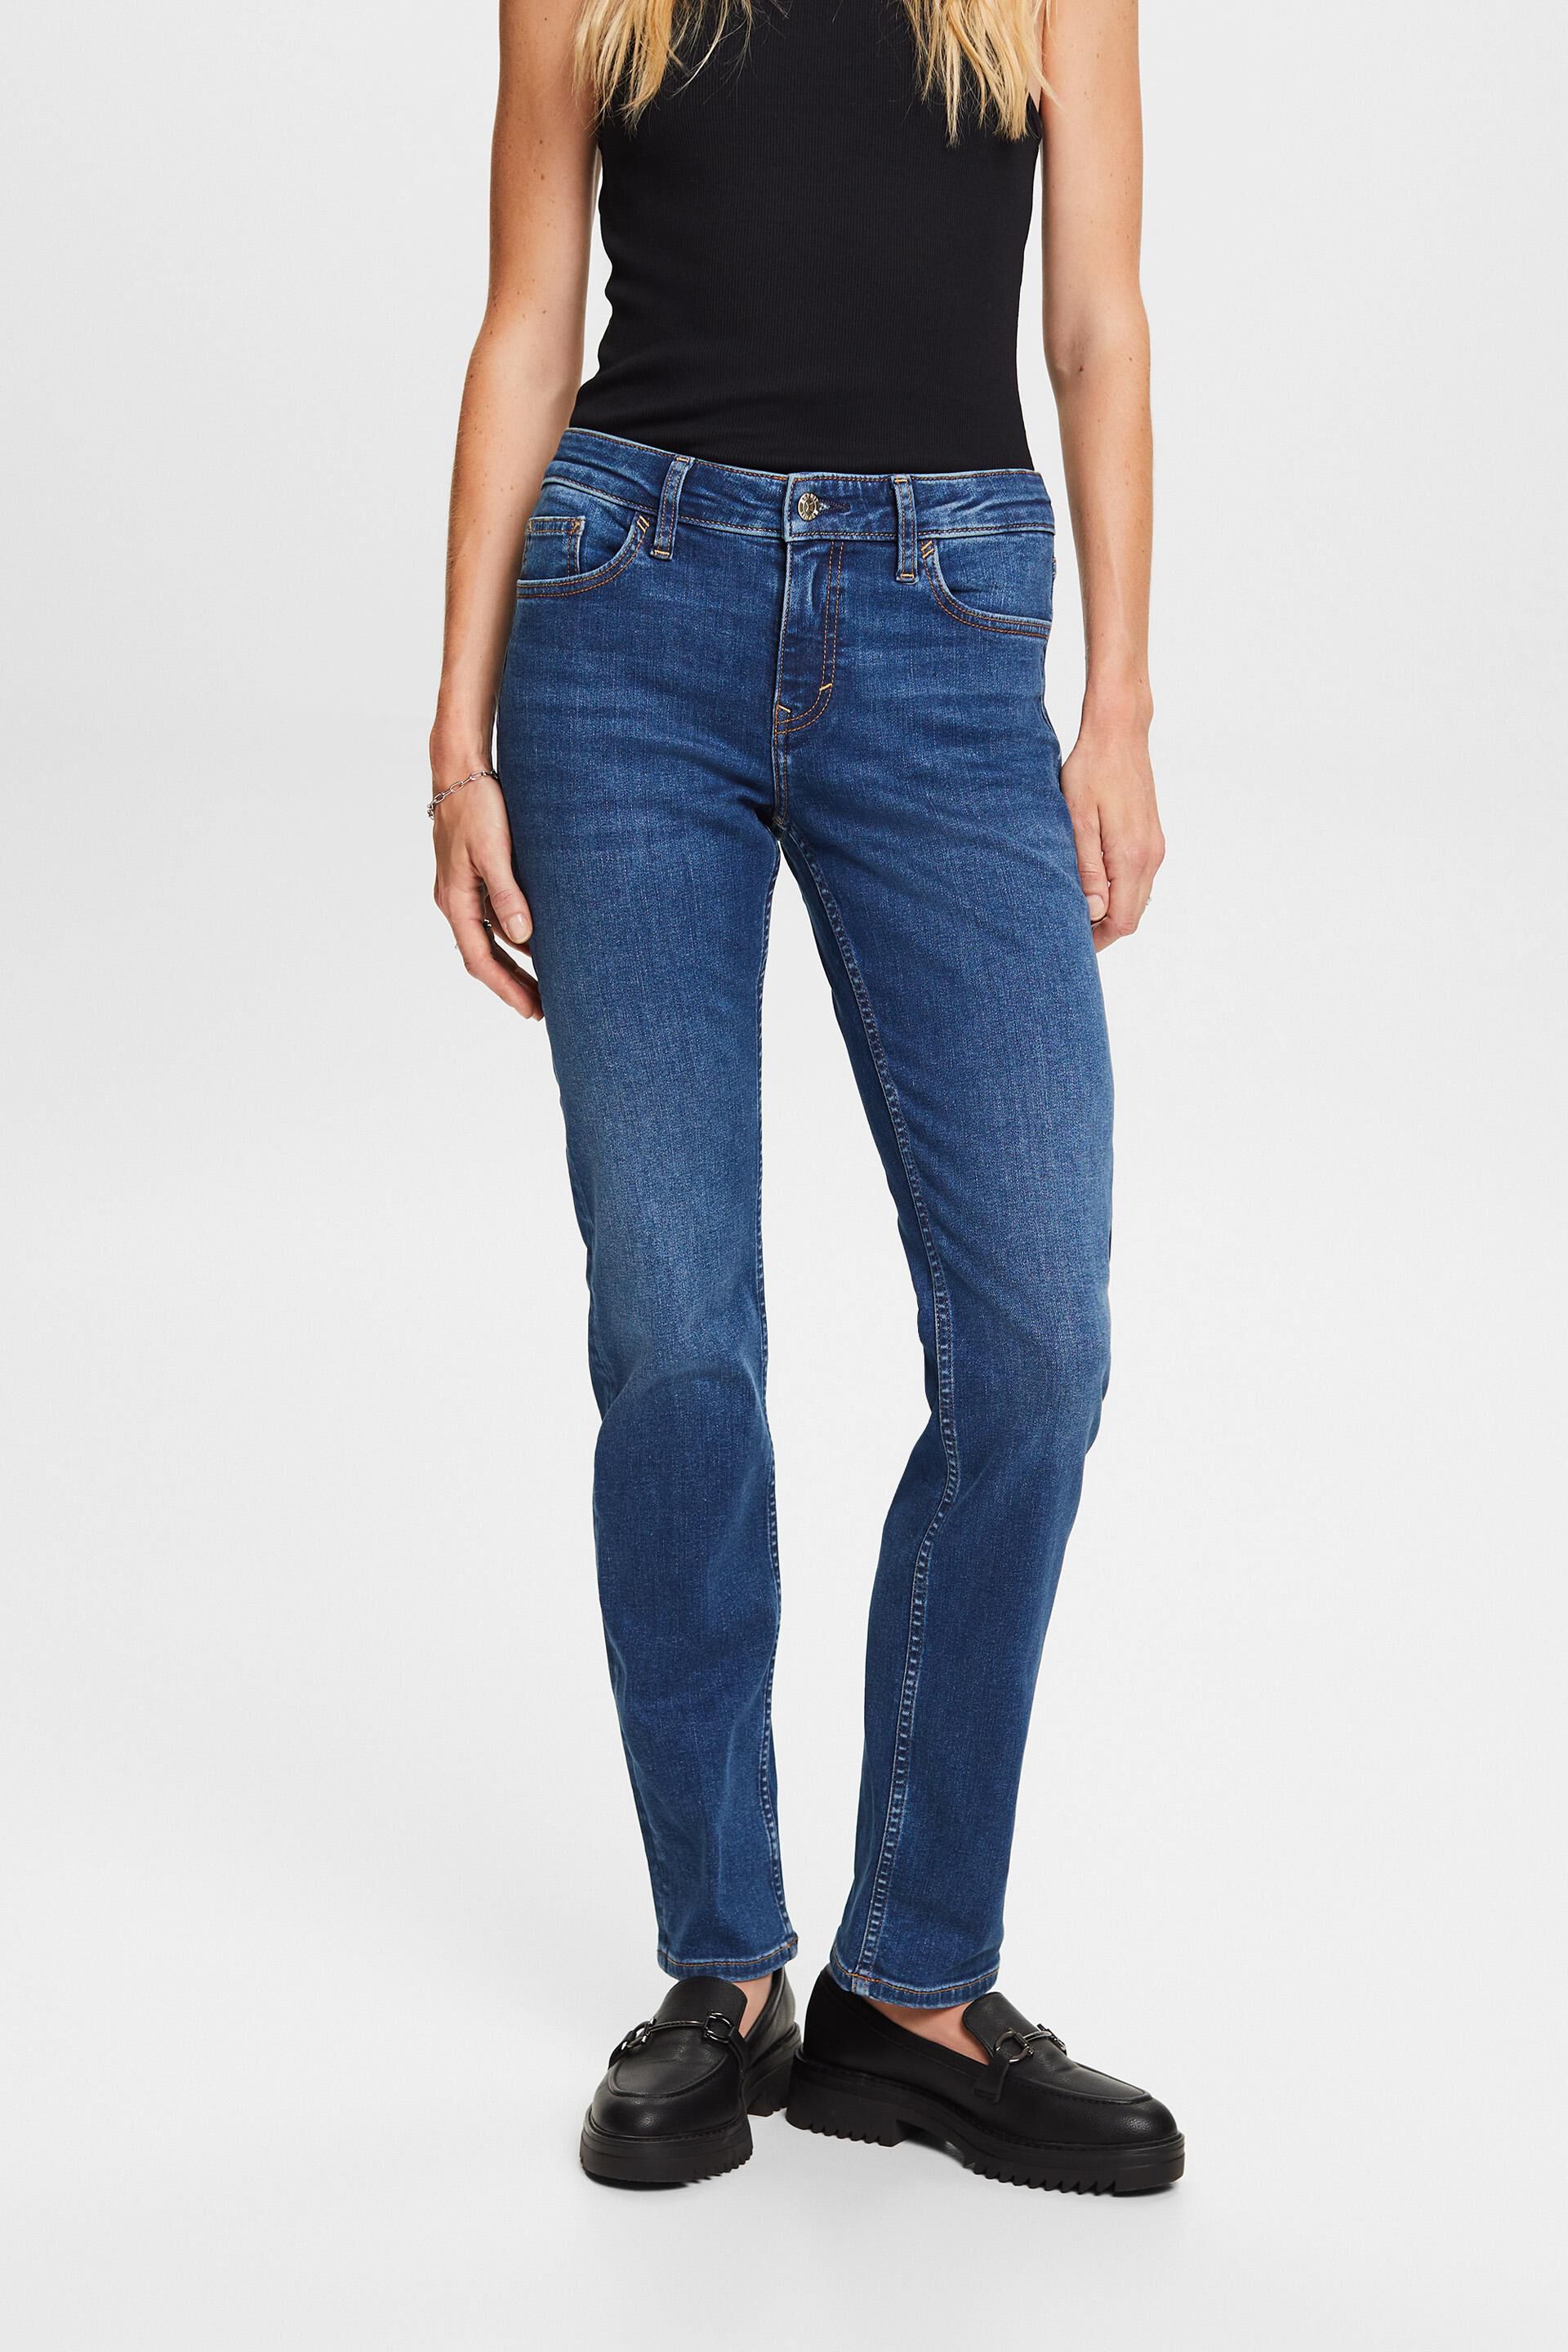 Straight leg stretch jeans, cotton blend